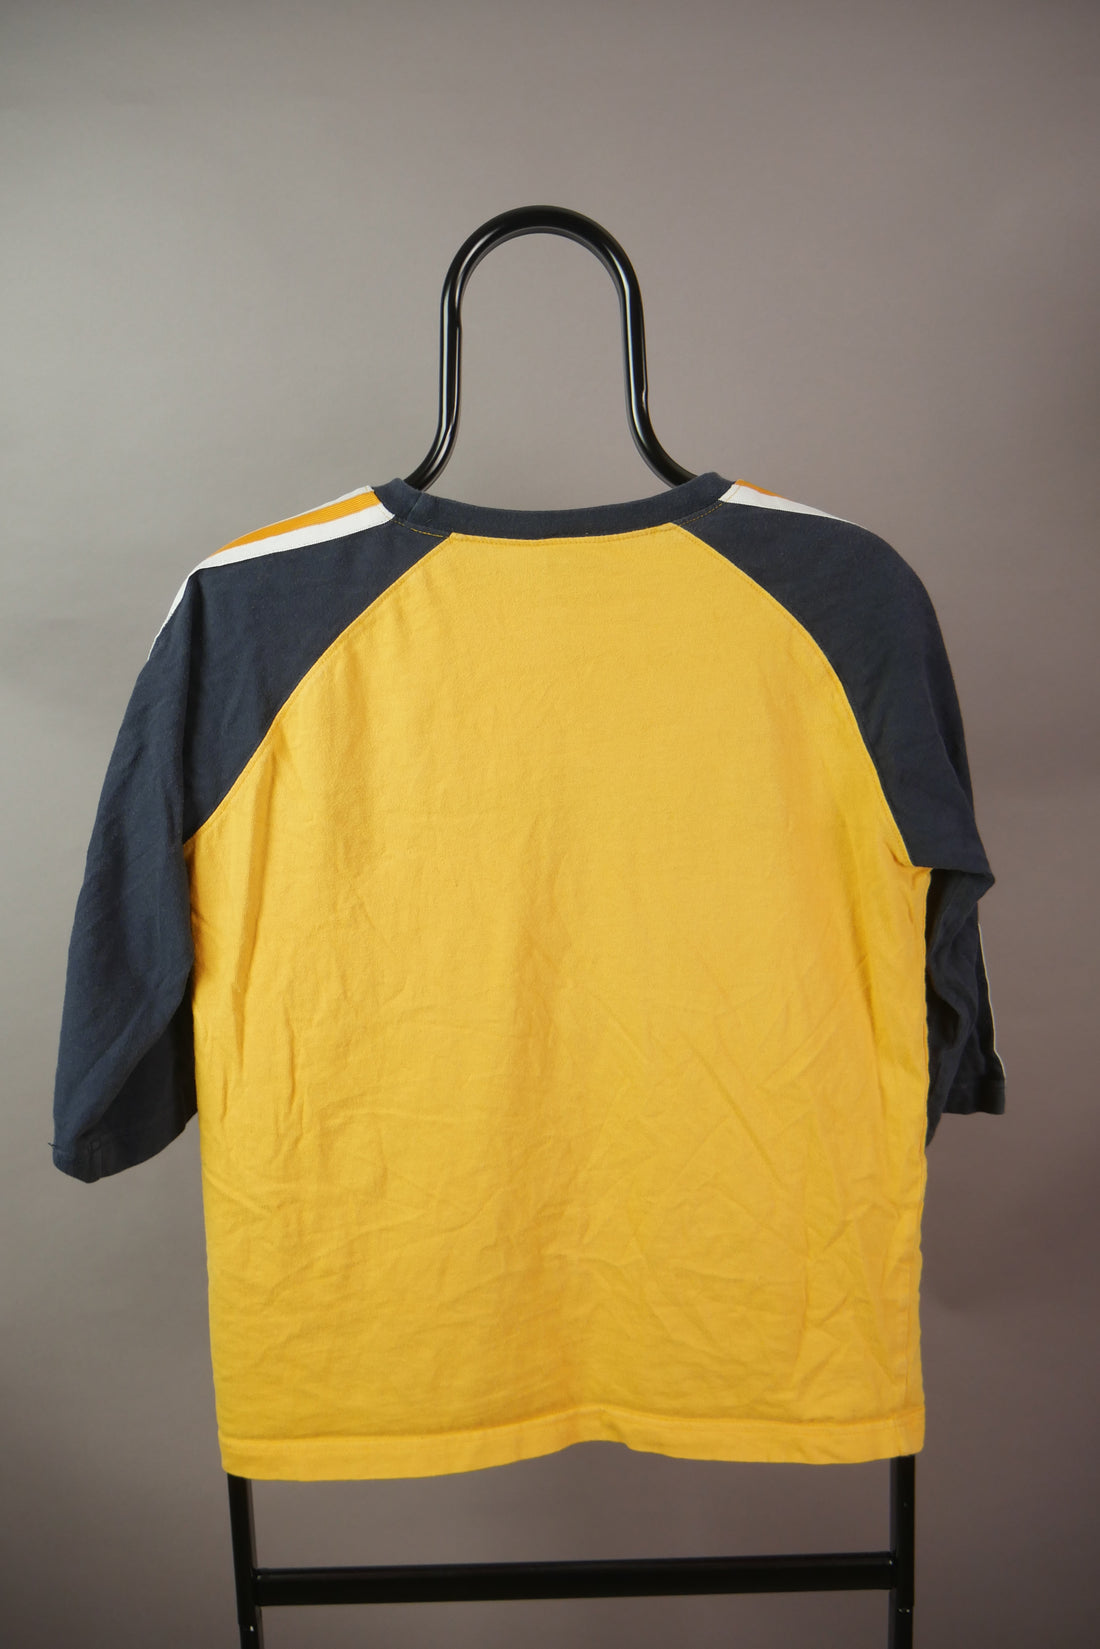 The Adidas 3/4 Sleeve T-Shirt (XS)